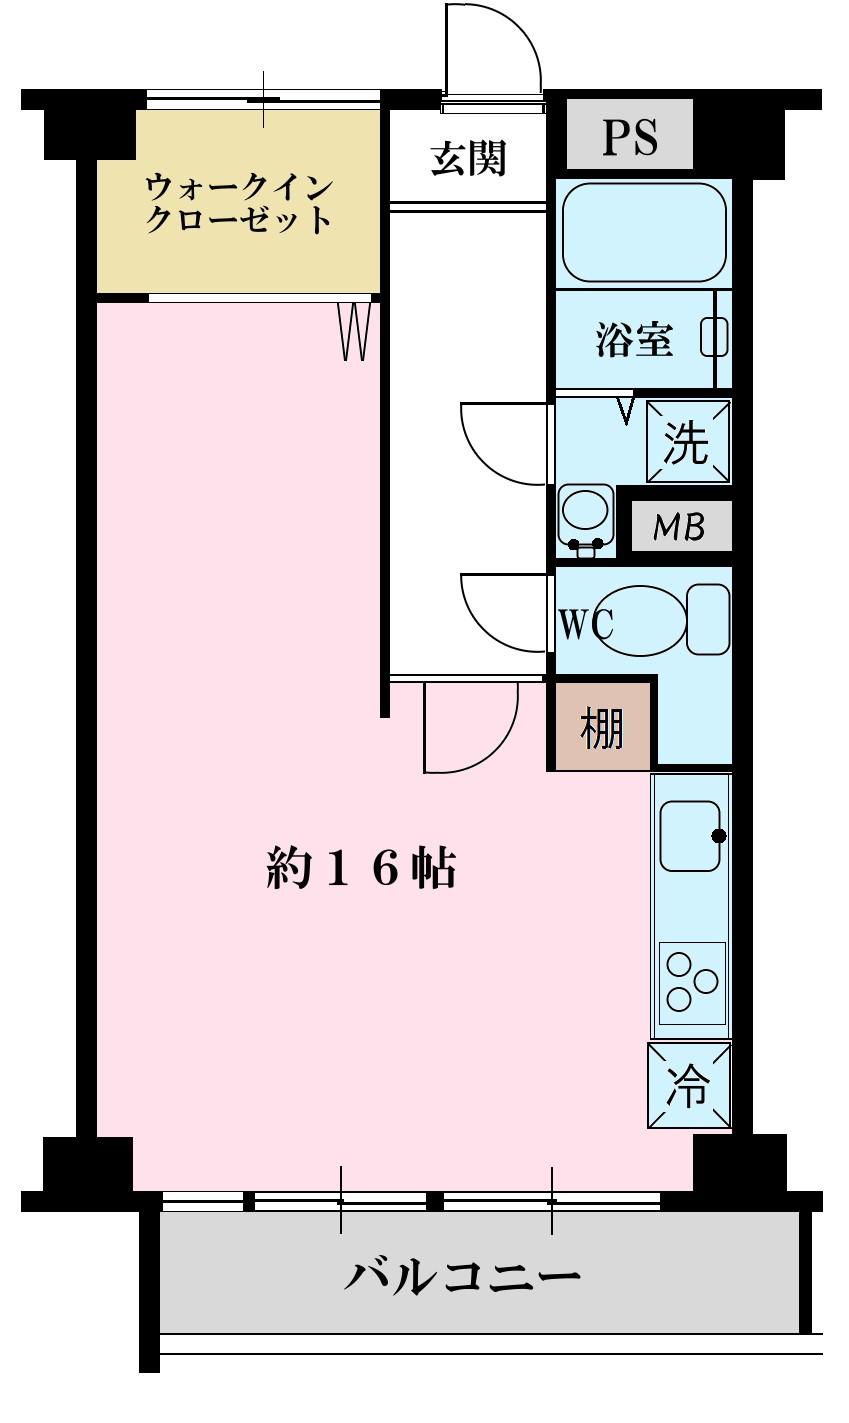 Floor plan. Price 12.8 million yen, Occupied area 40.59 sq m , Balcony area 5.1 sq m